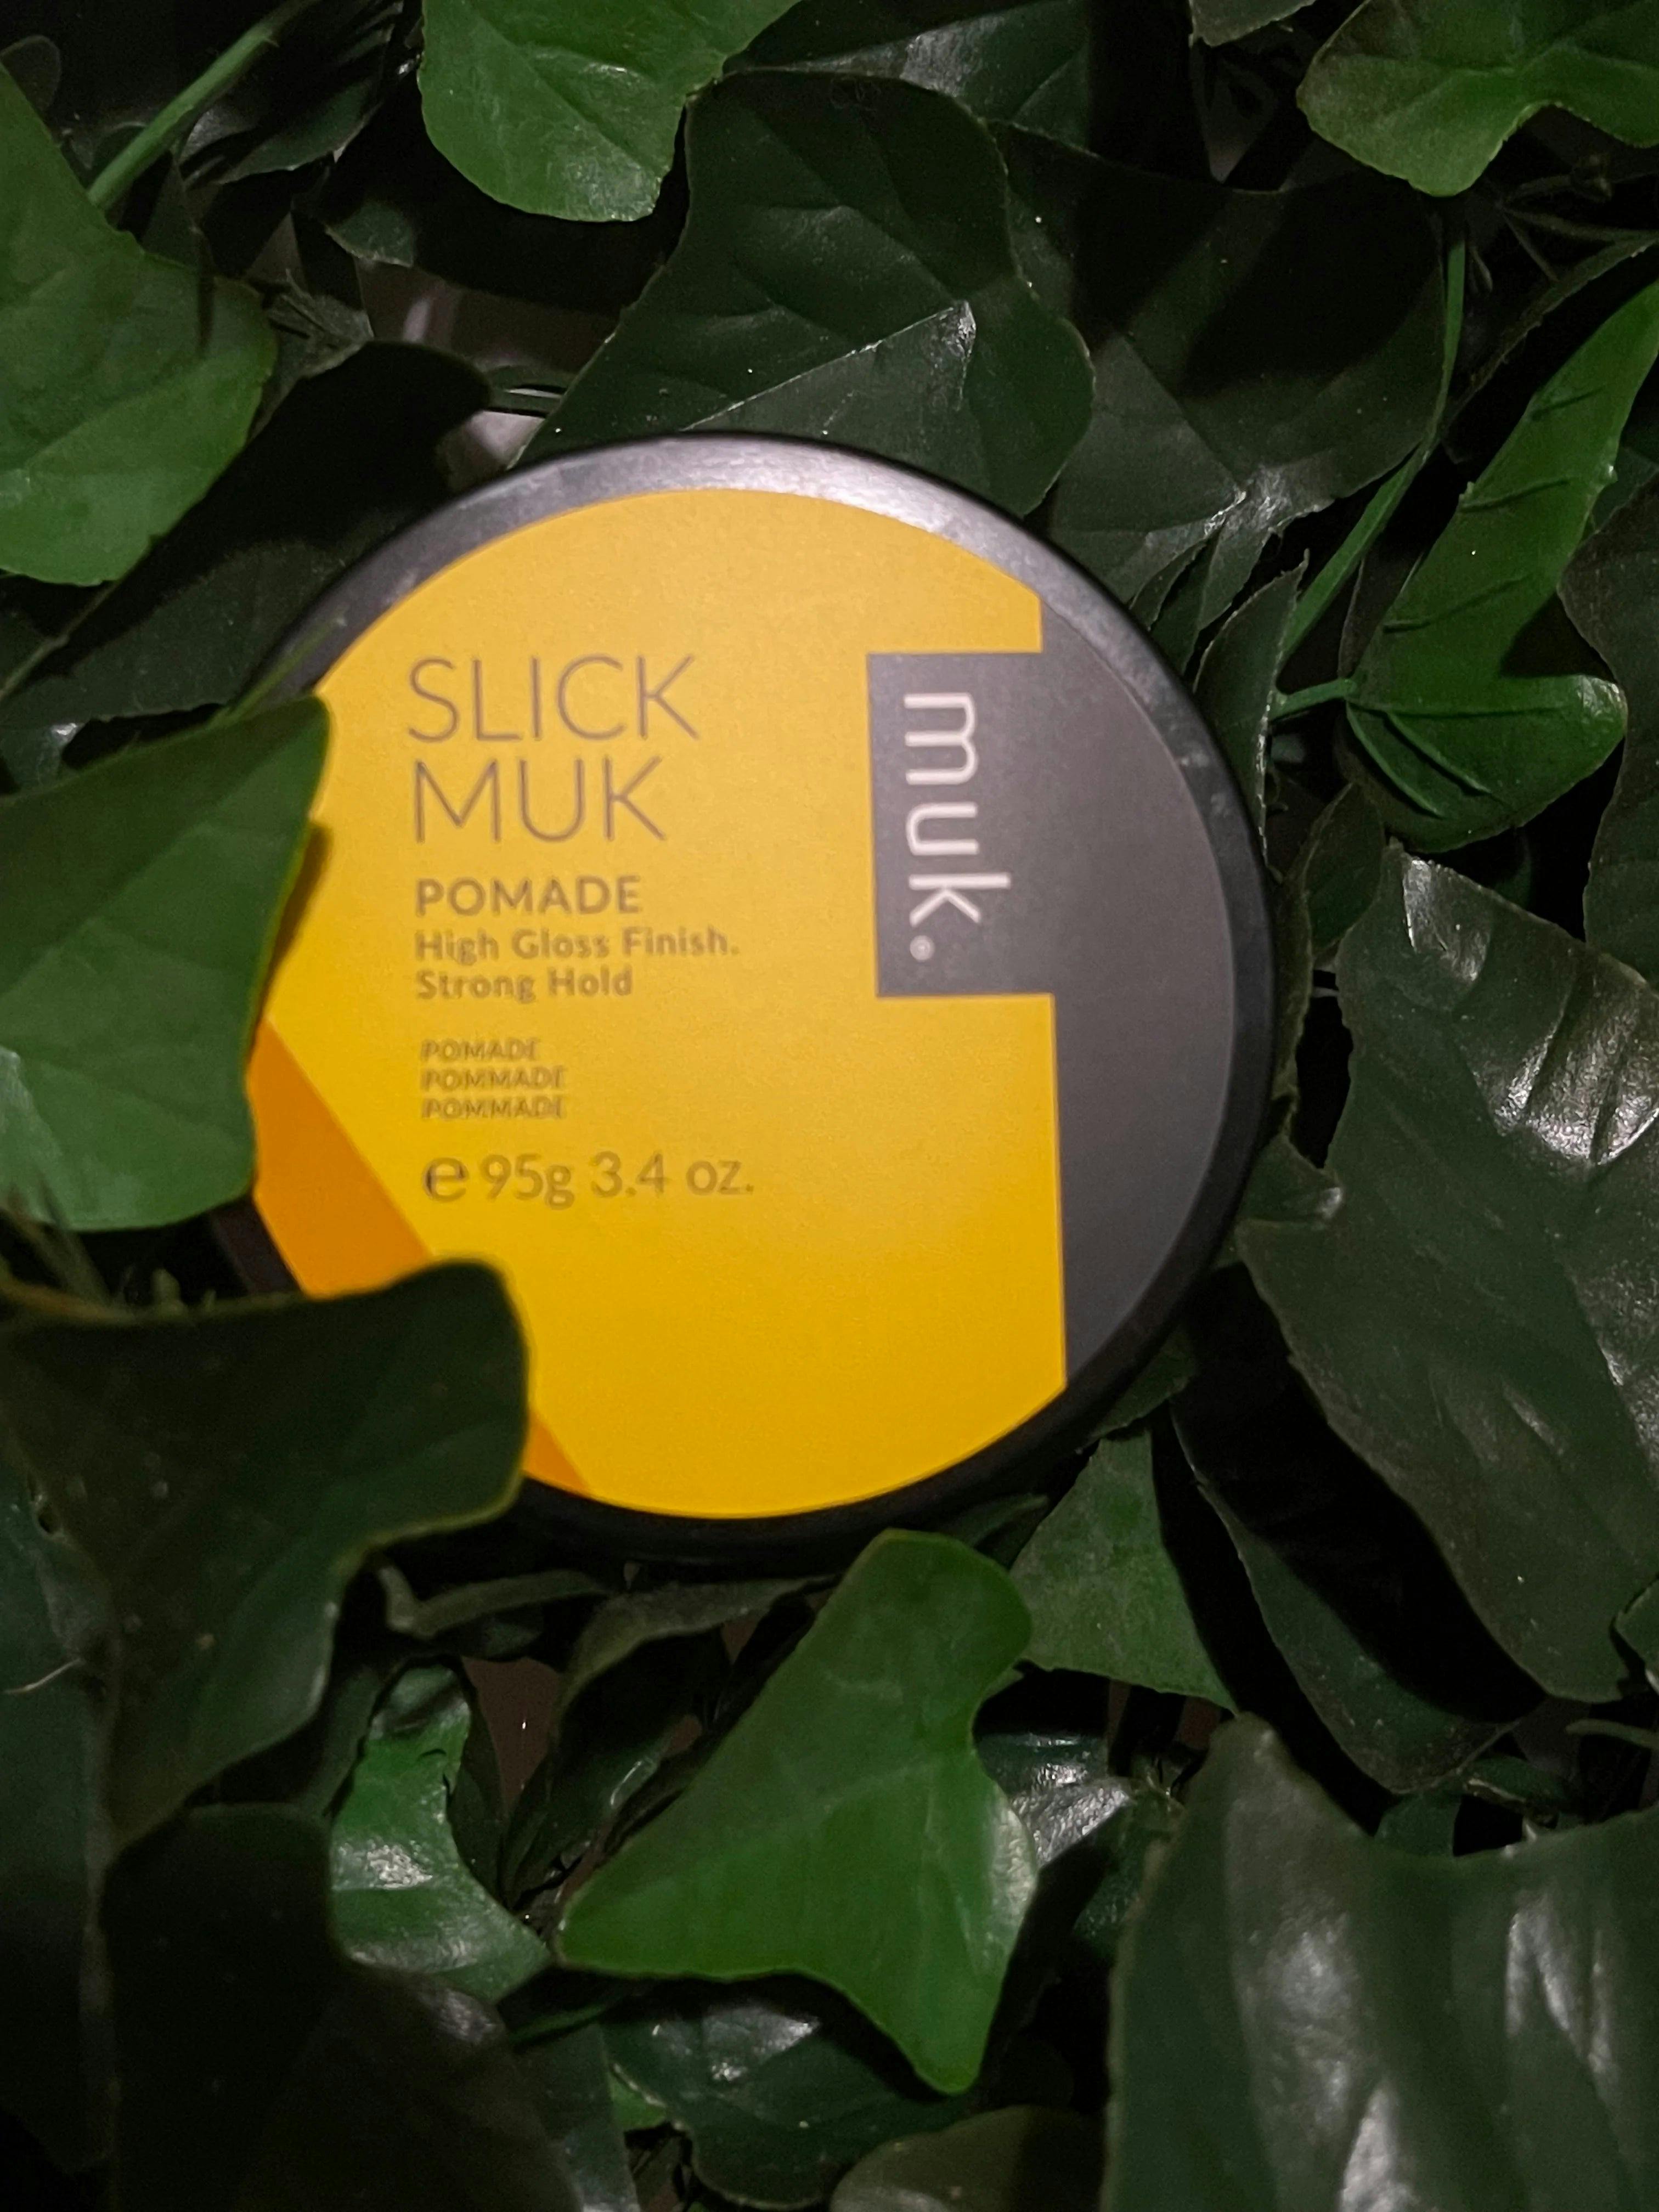 Muk Slick muk Pomade 95g + 50g Duo Pack